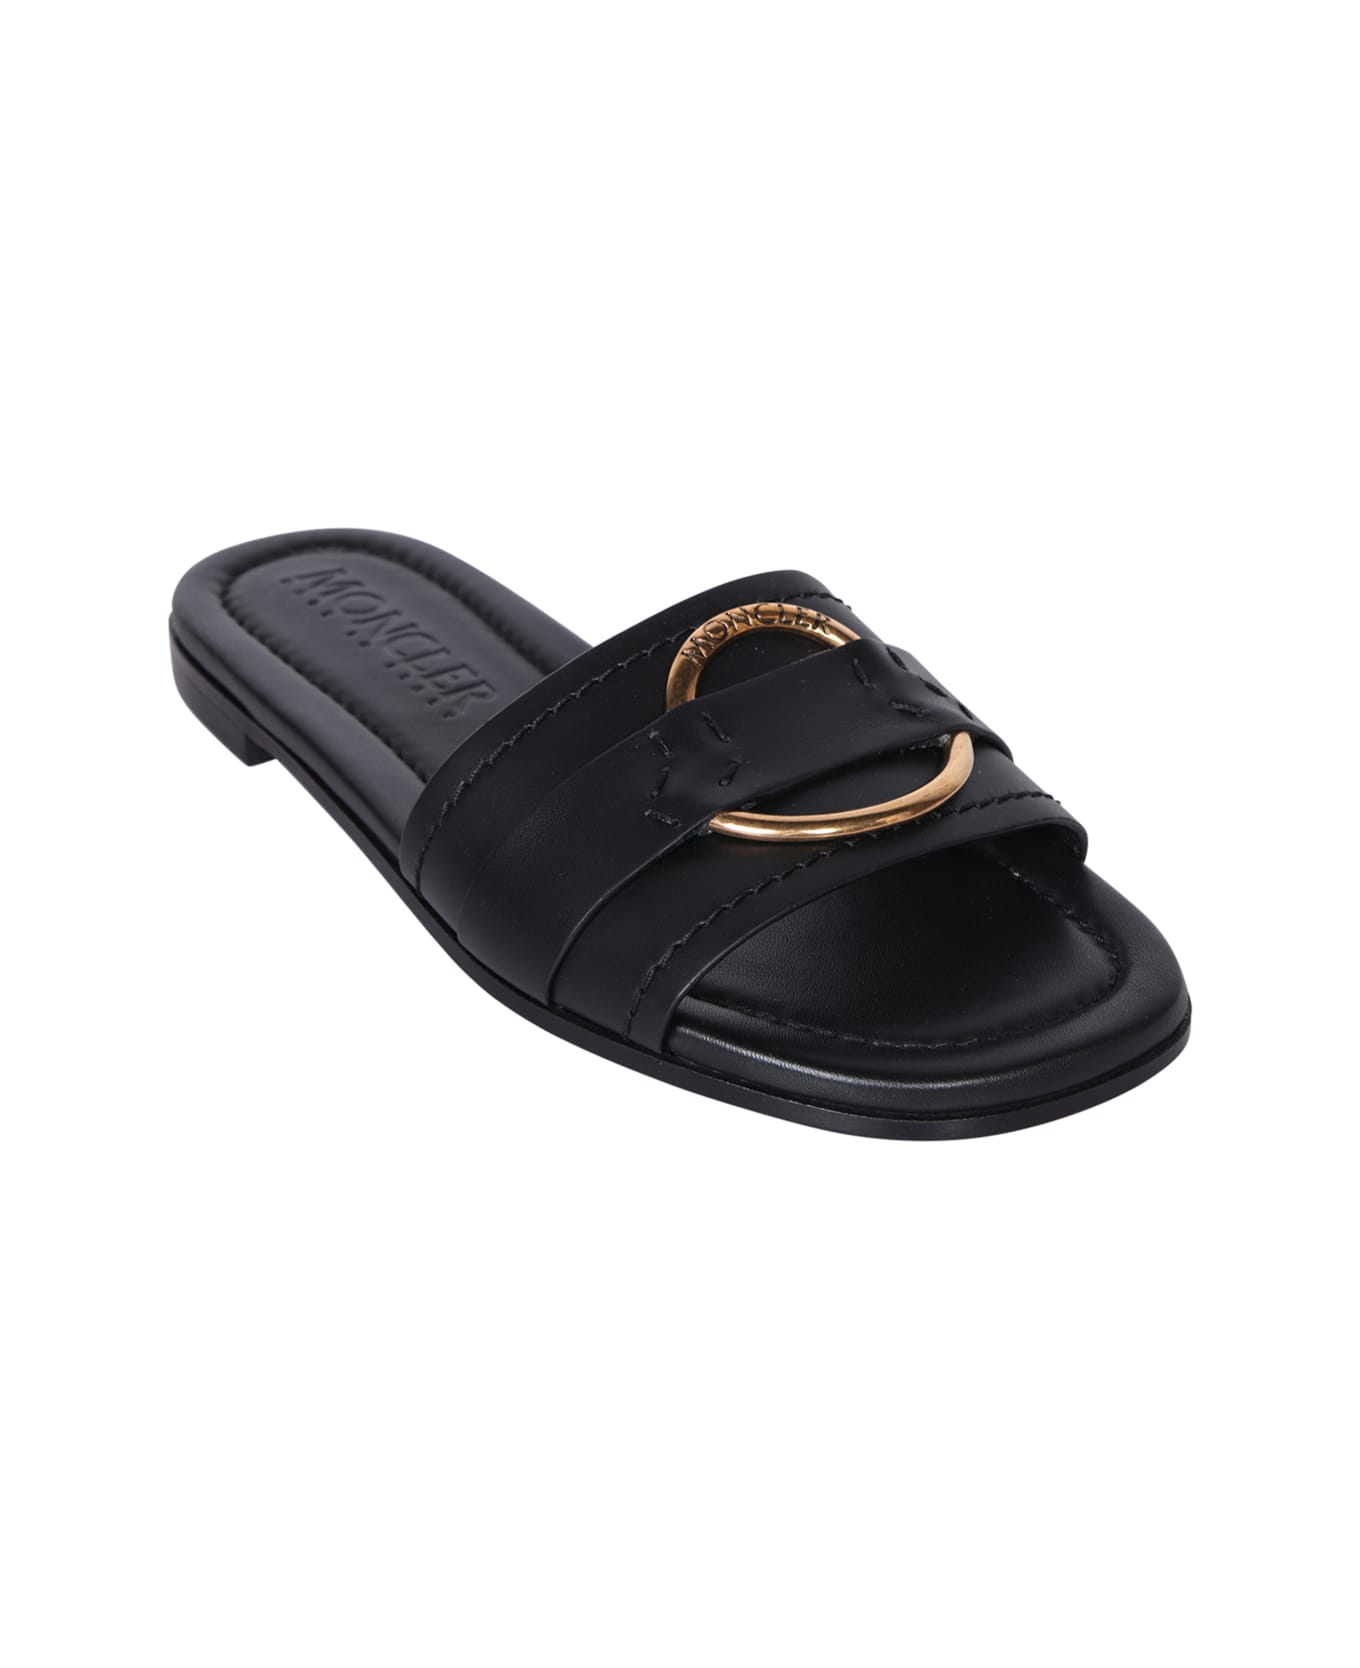 Moncler Bell Leather Slides - Nero サンダル